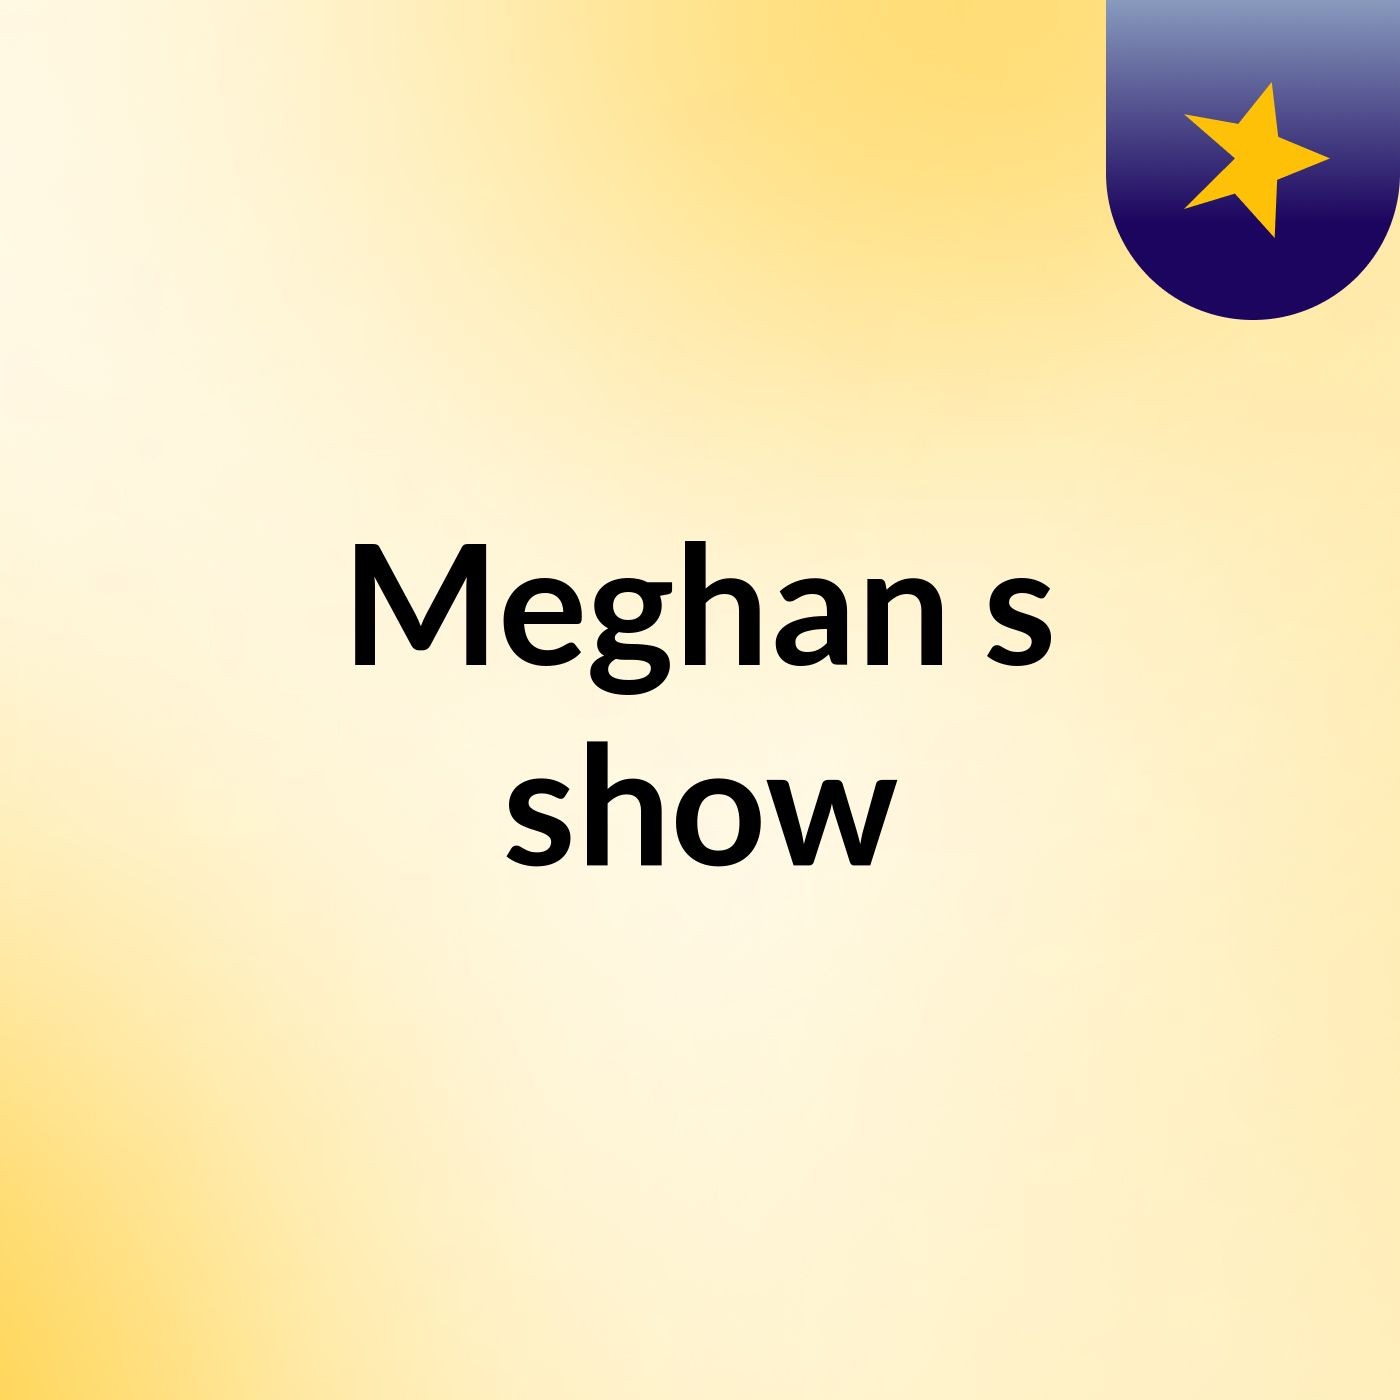 Meghan's show